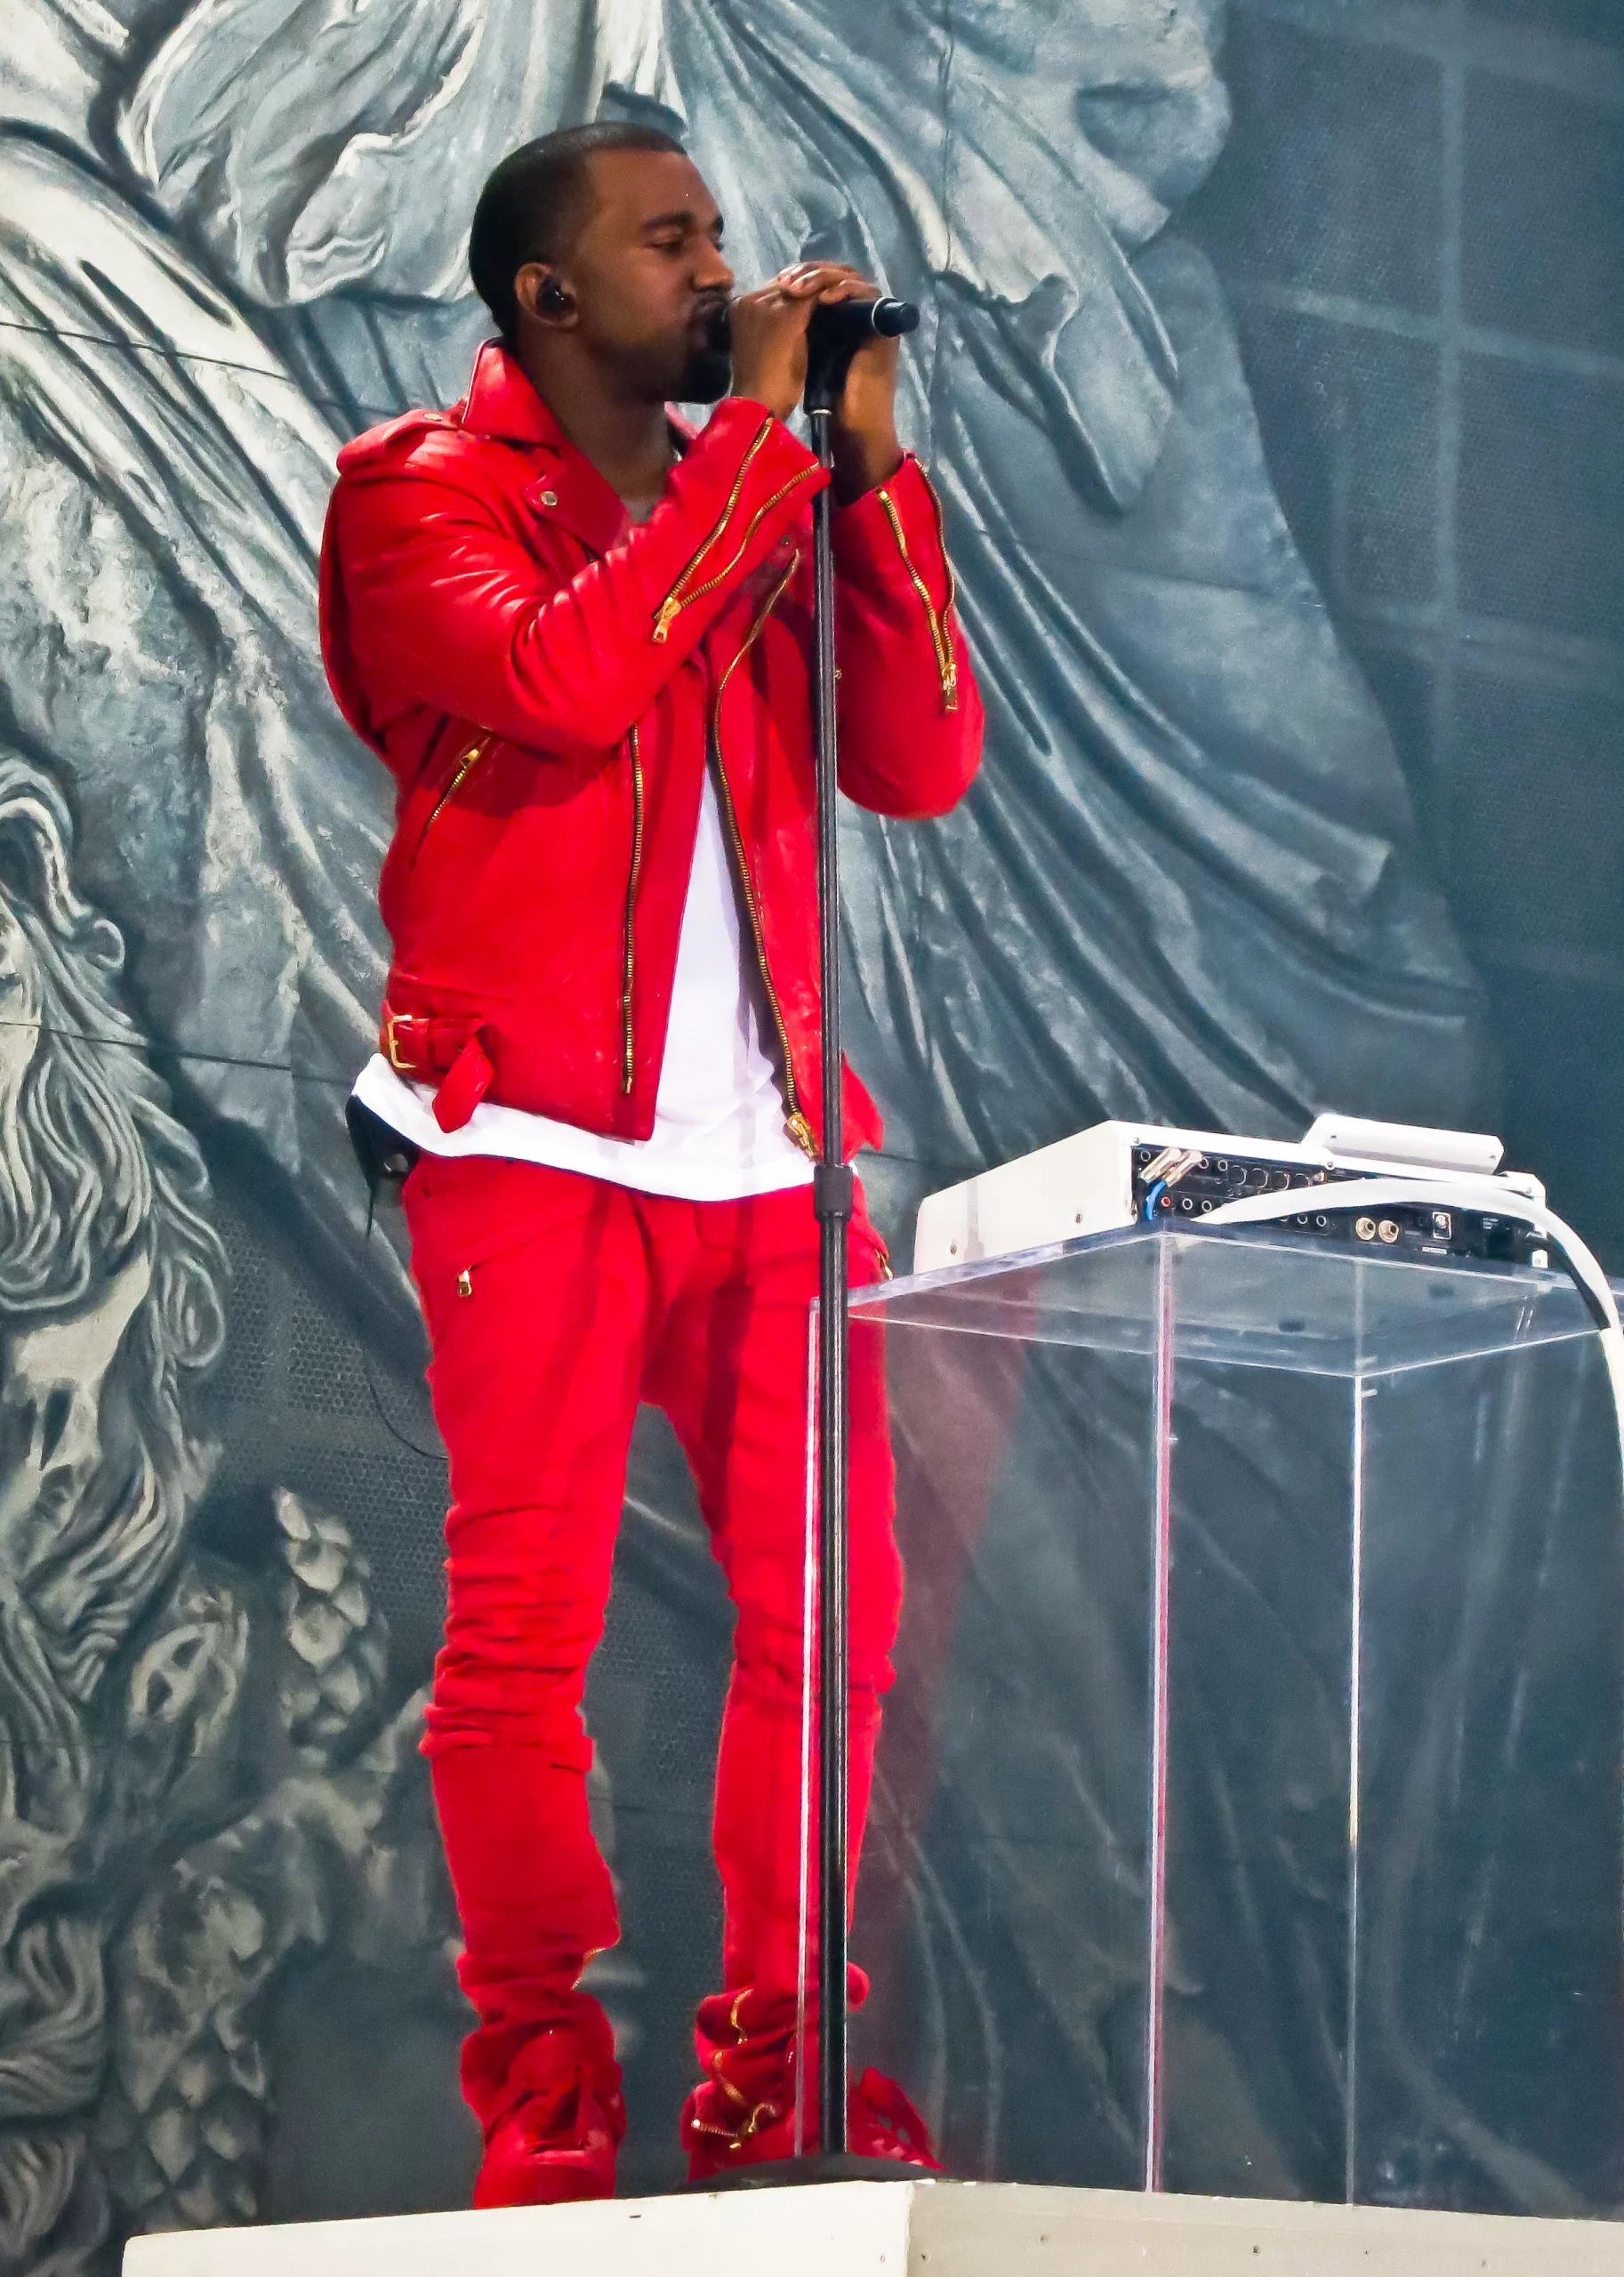 Kanye West's Single "Power" Sparks Lawsuit